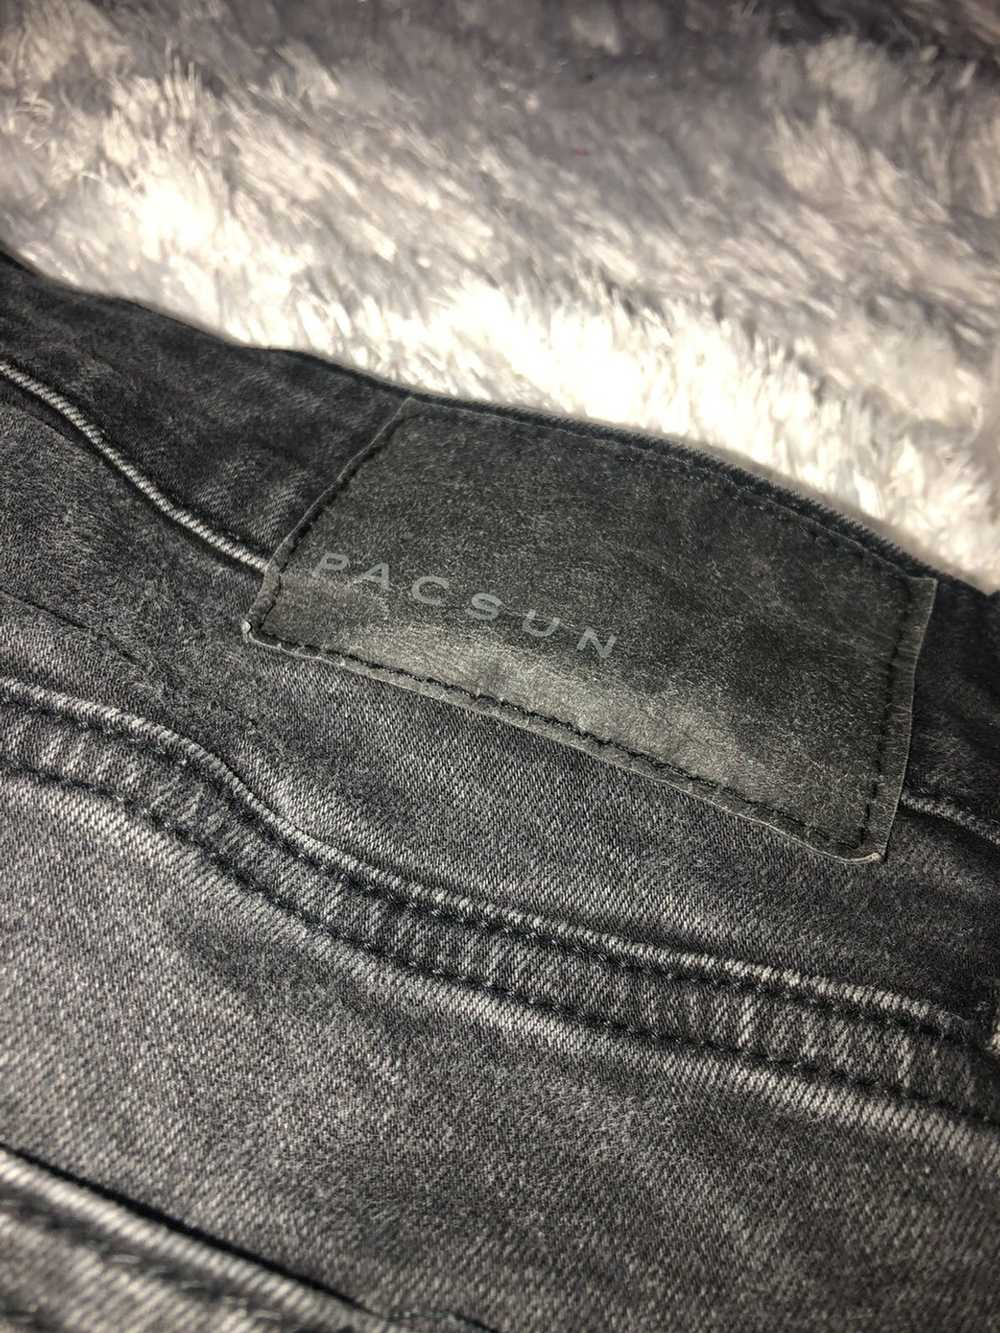 Pacsun Black Grayish Pacsun Jeans - image 4